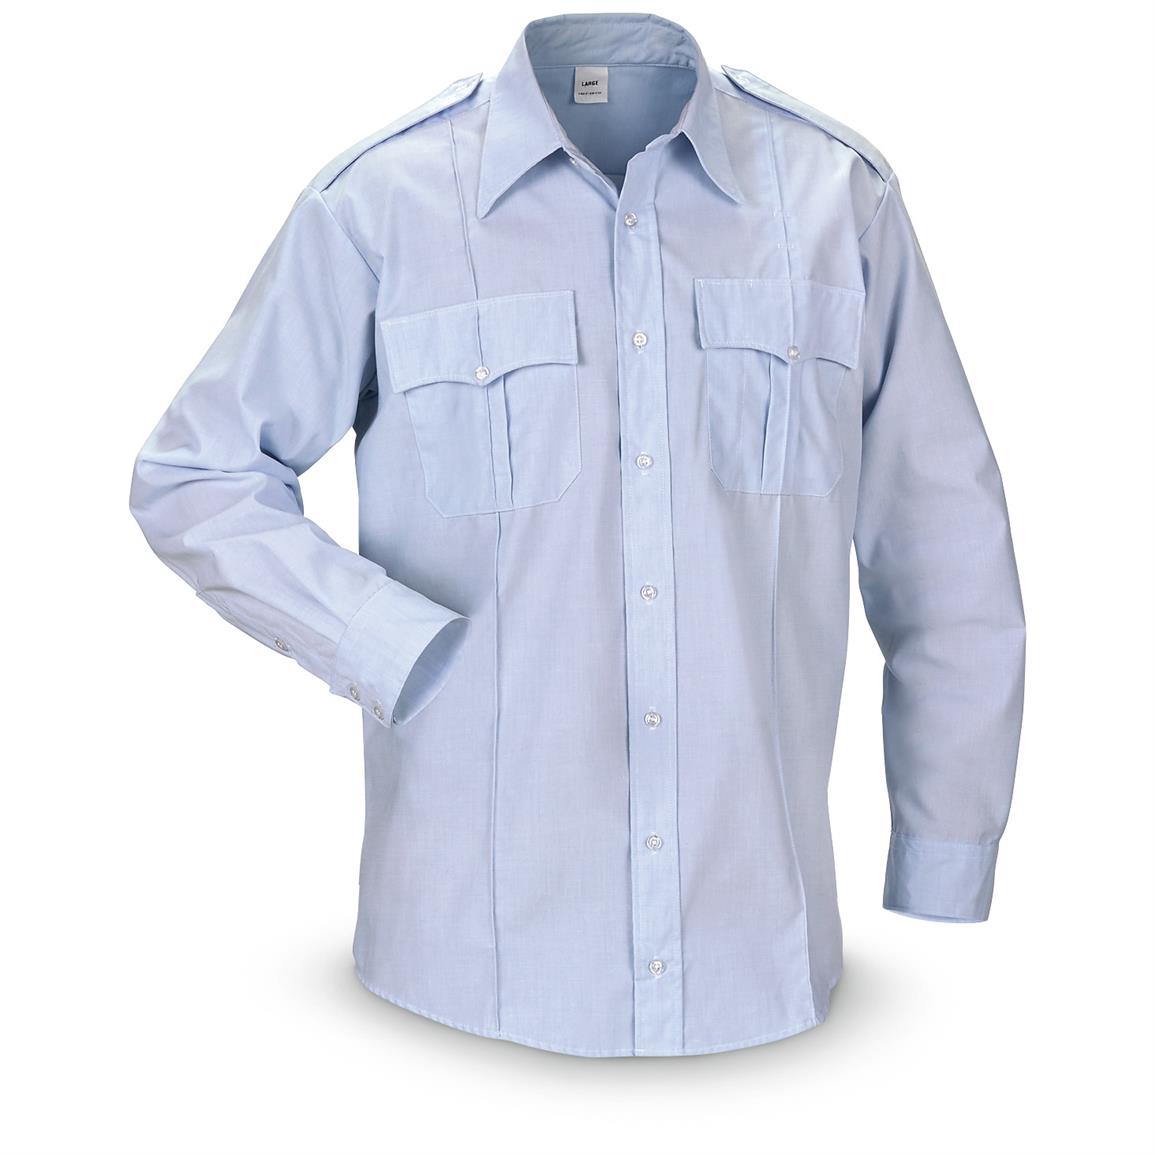 U.S. Military Police Surplus Dress Uniform Shirt, New - 650616 ...